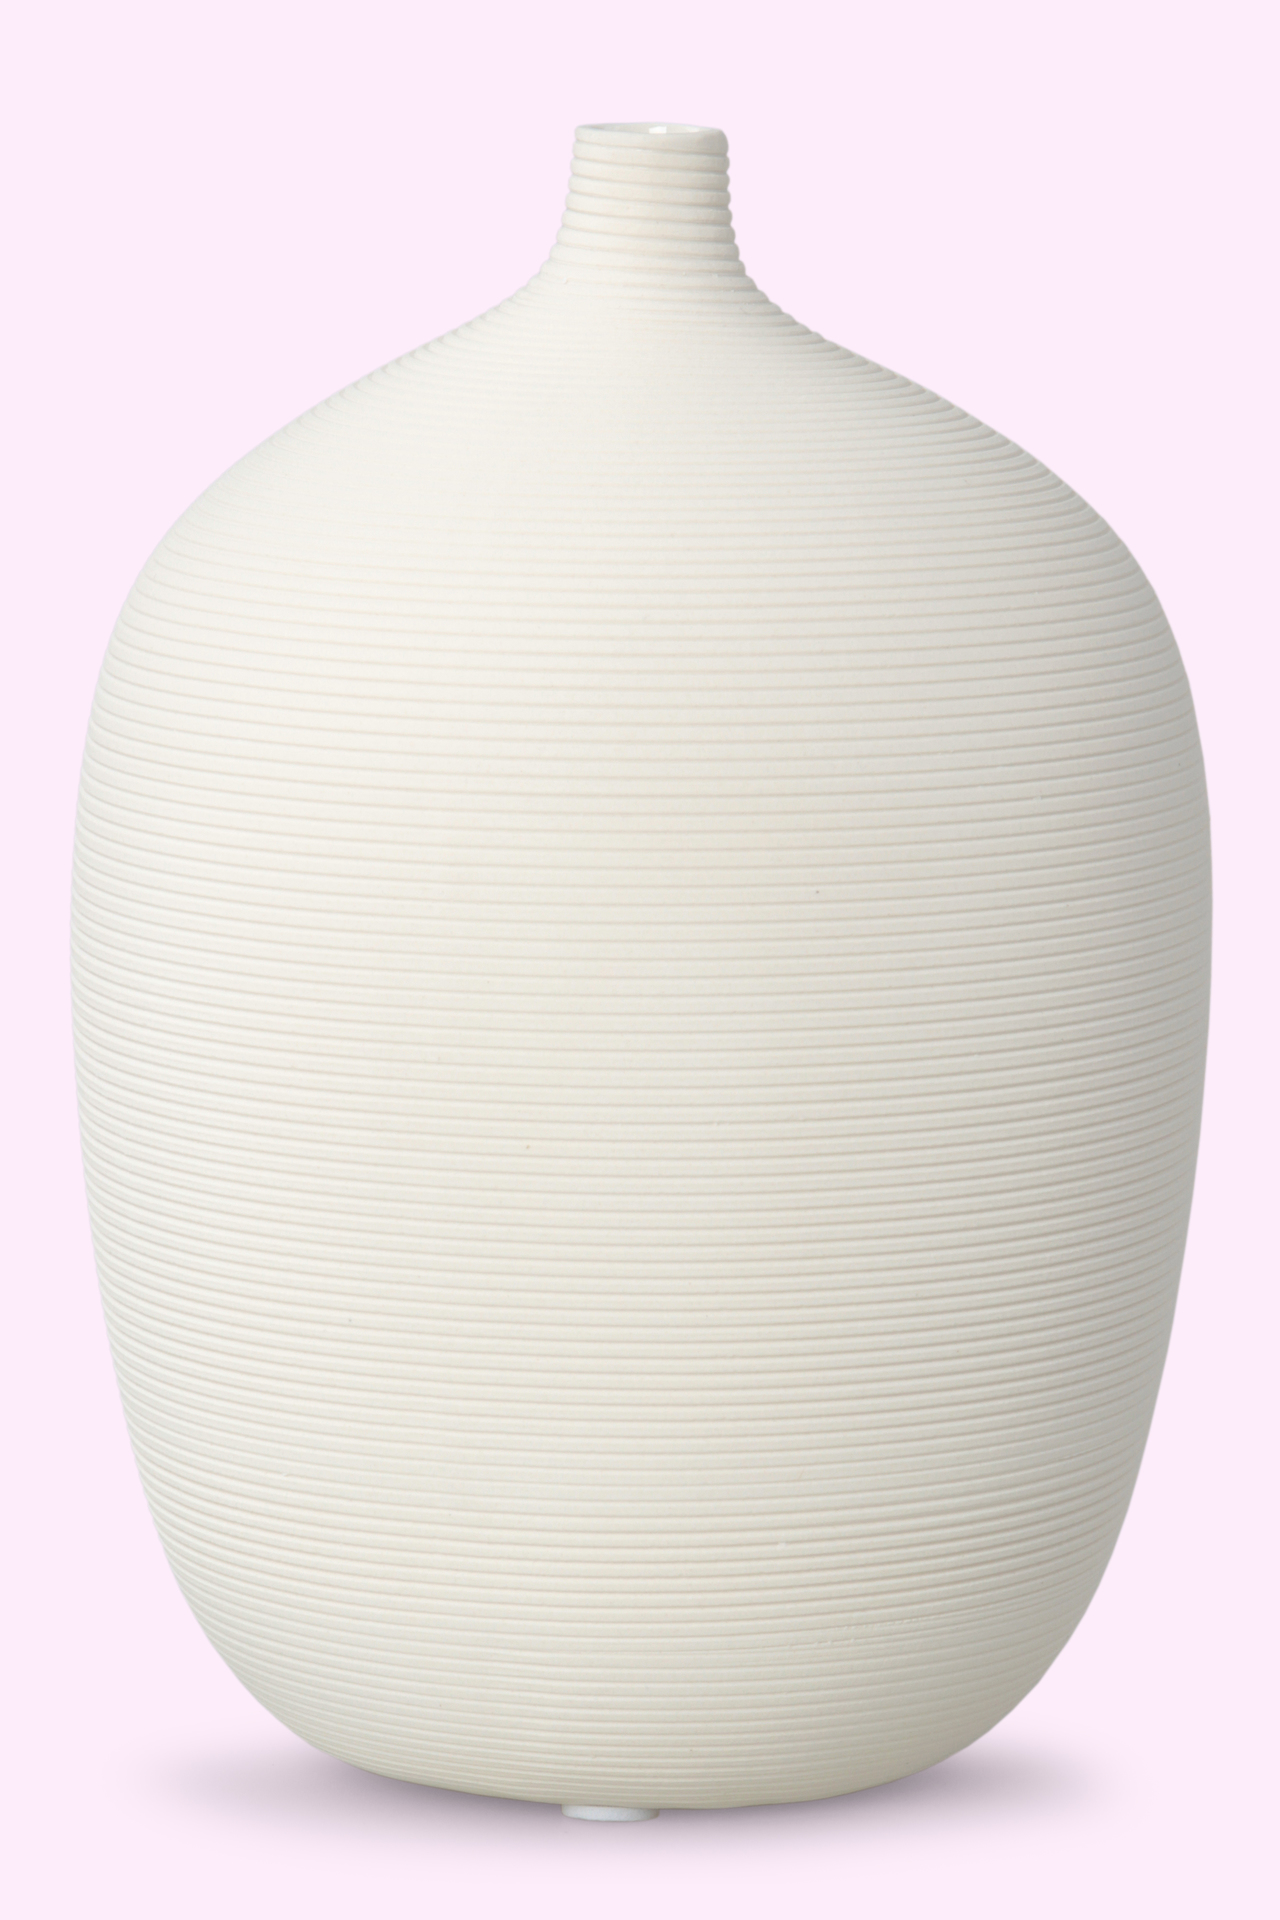 DA89152-Porcelánová váza reliéfna štruktúra